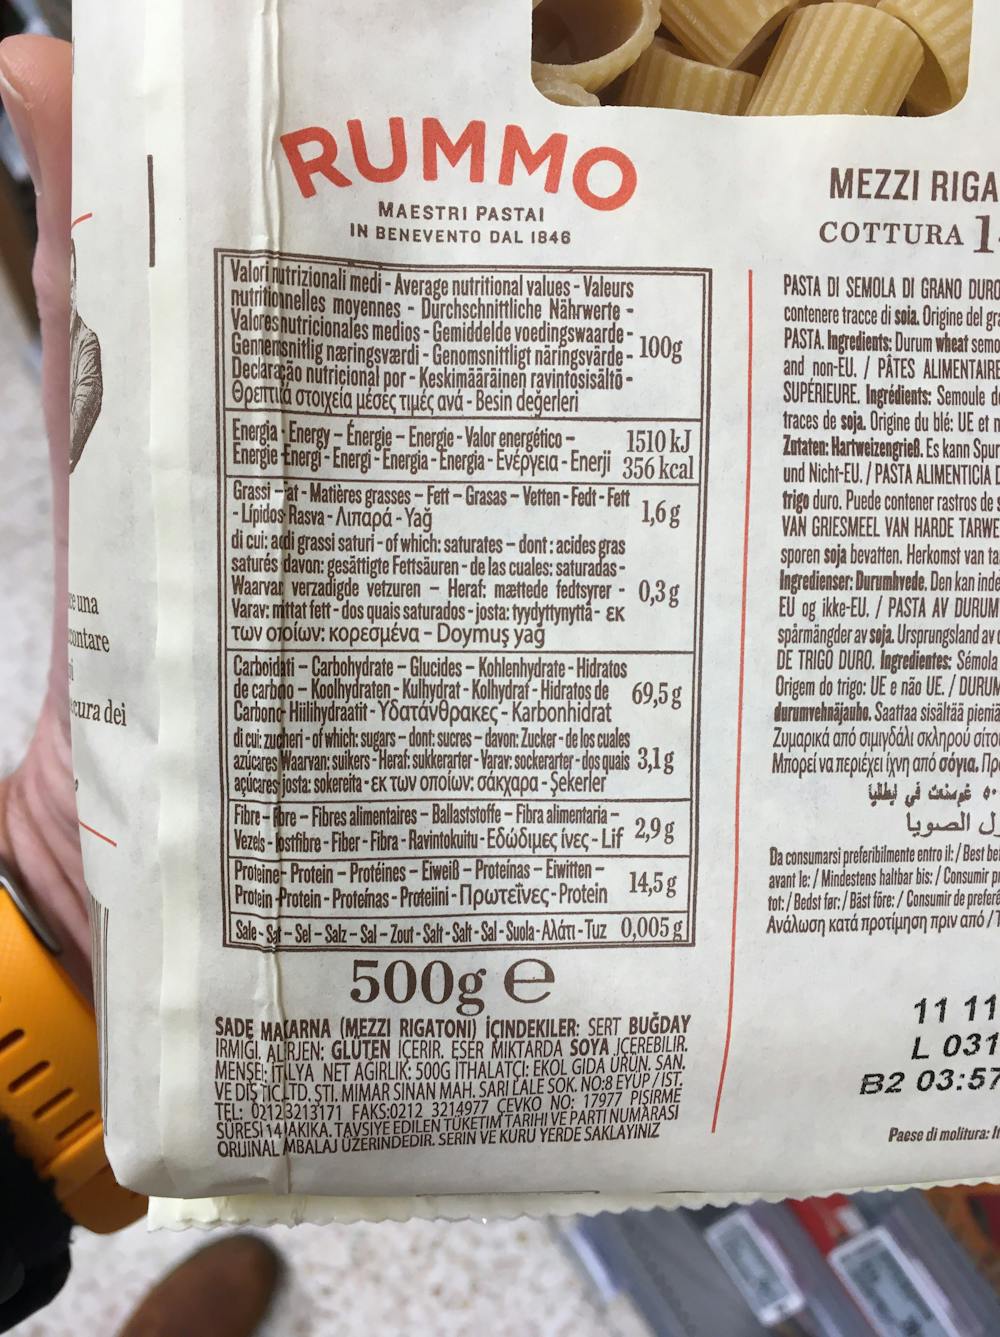 Ingredienslisten til Mezzi rigatoni no 51, Rummo